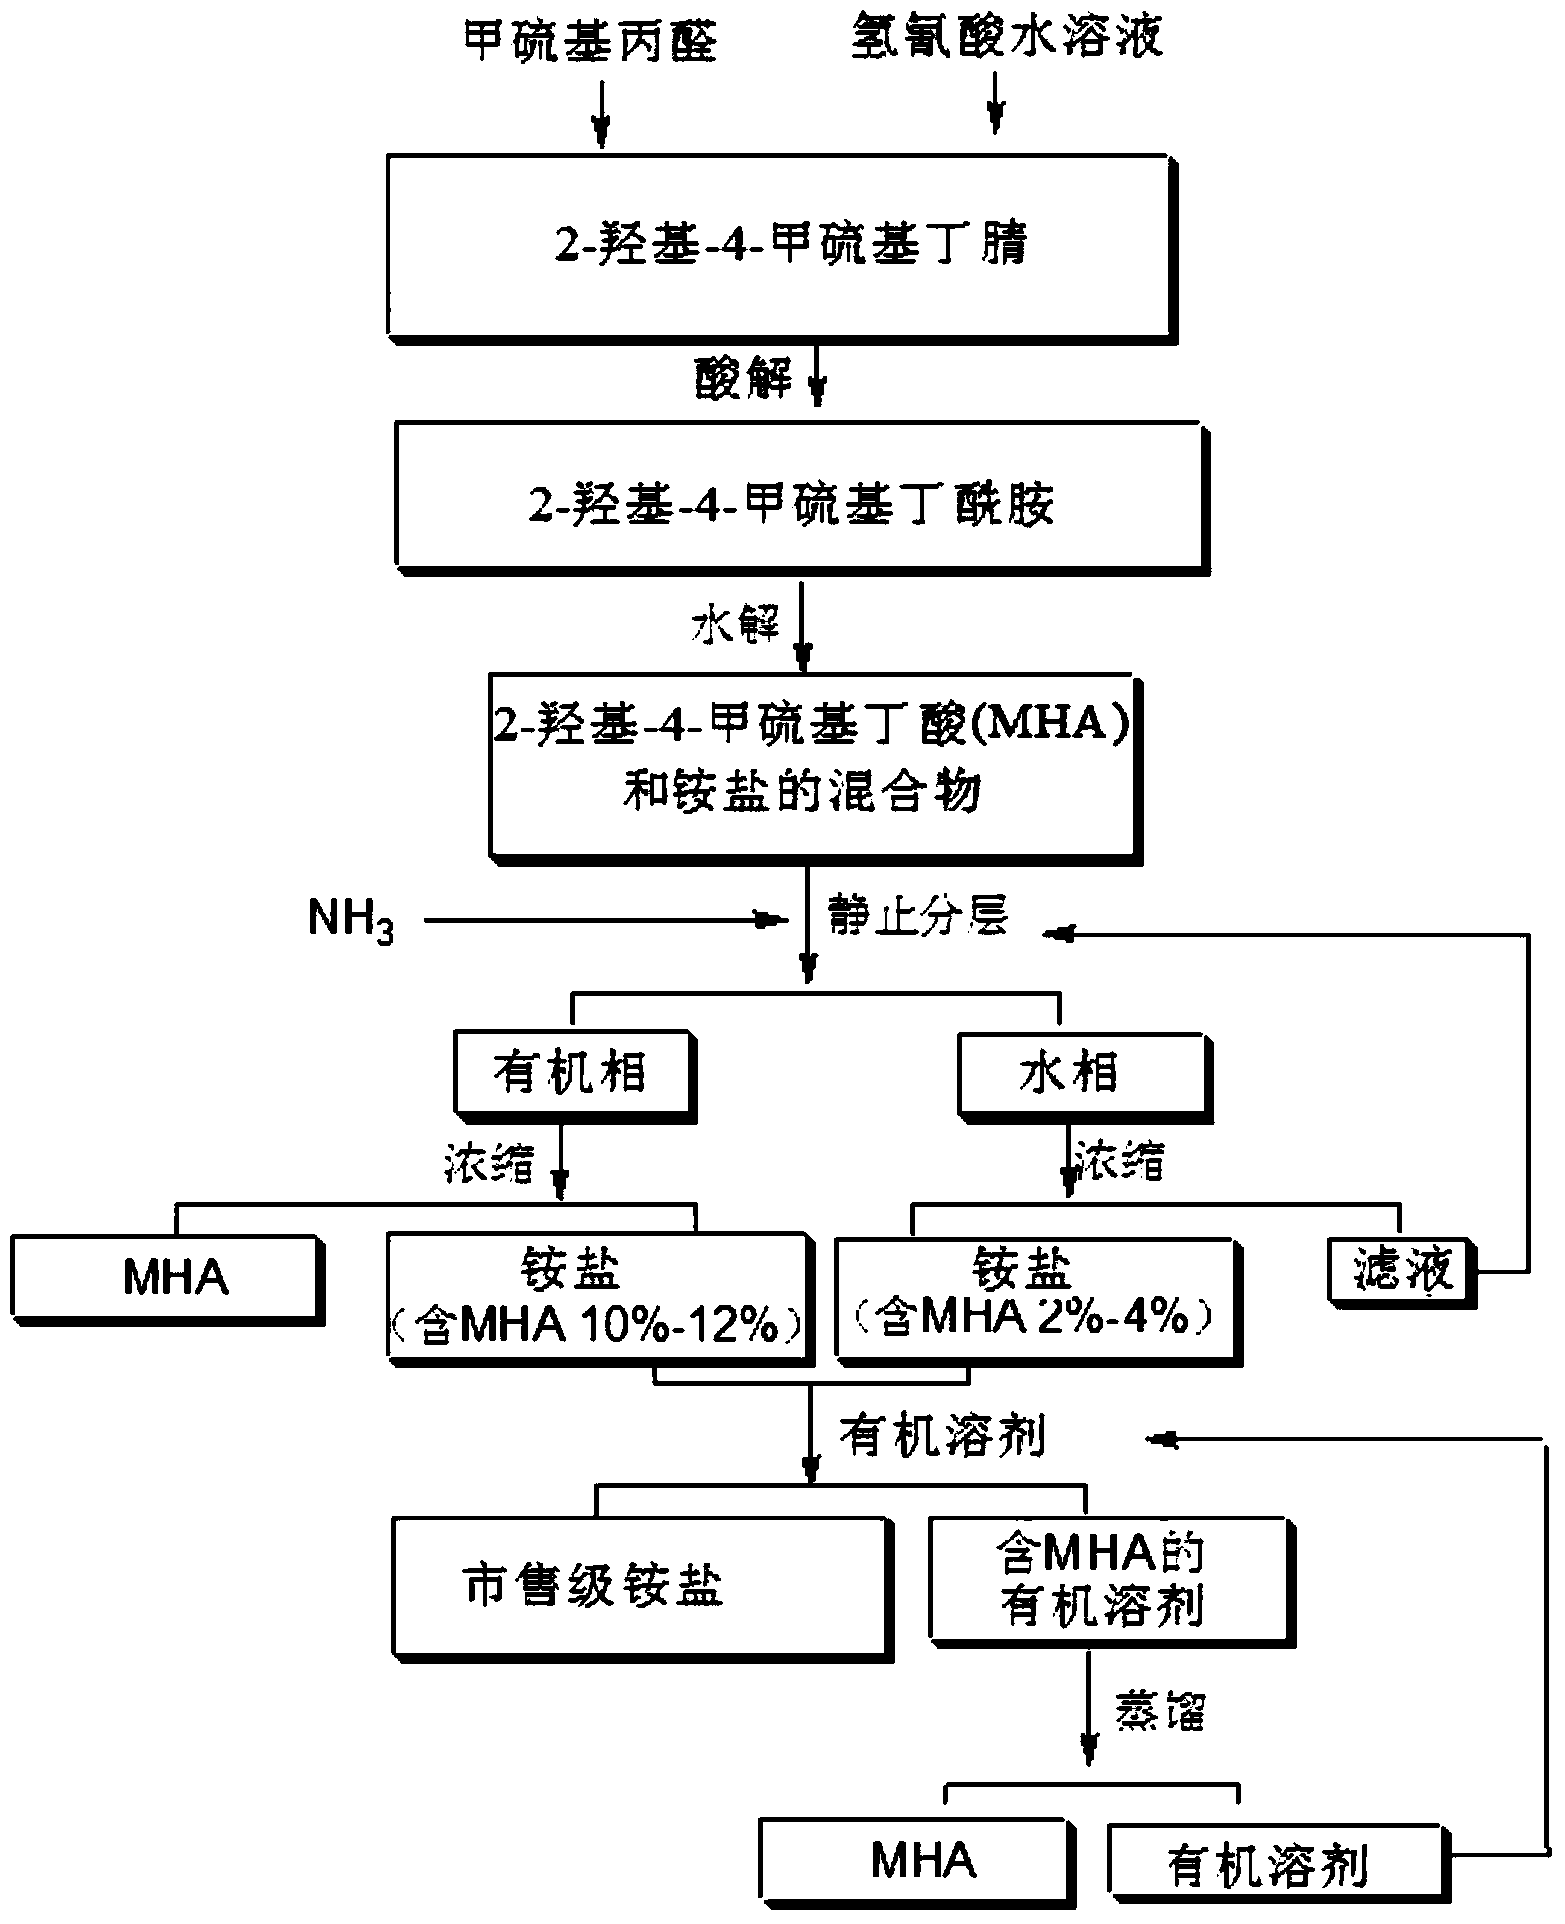 Preparation method of MHA (2-hydroxy-4-(methylthio) butyric acid)